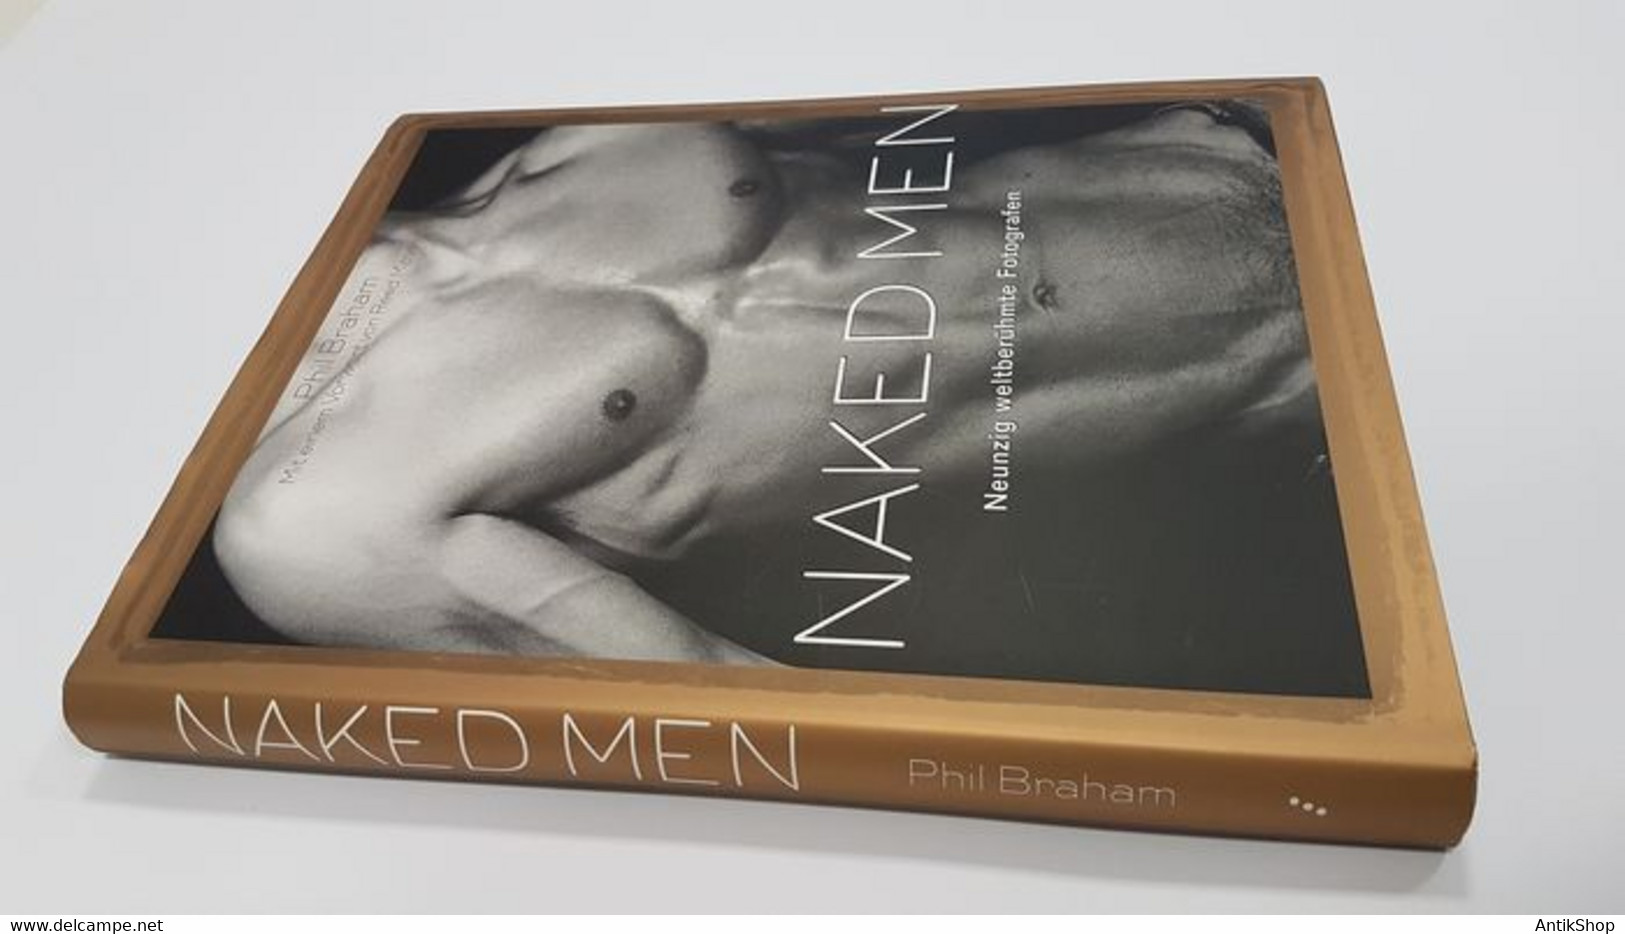 Naked Men. Neunzig Weltberühmte Fotografen Ed. By Phil Braham. Gay Erotica Curiosa - Belle-Arti